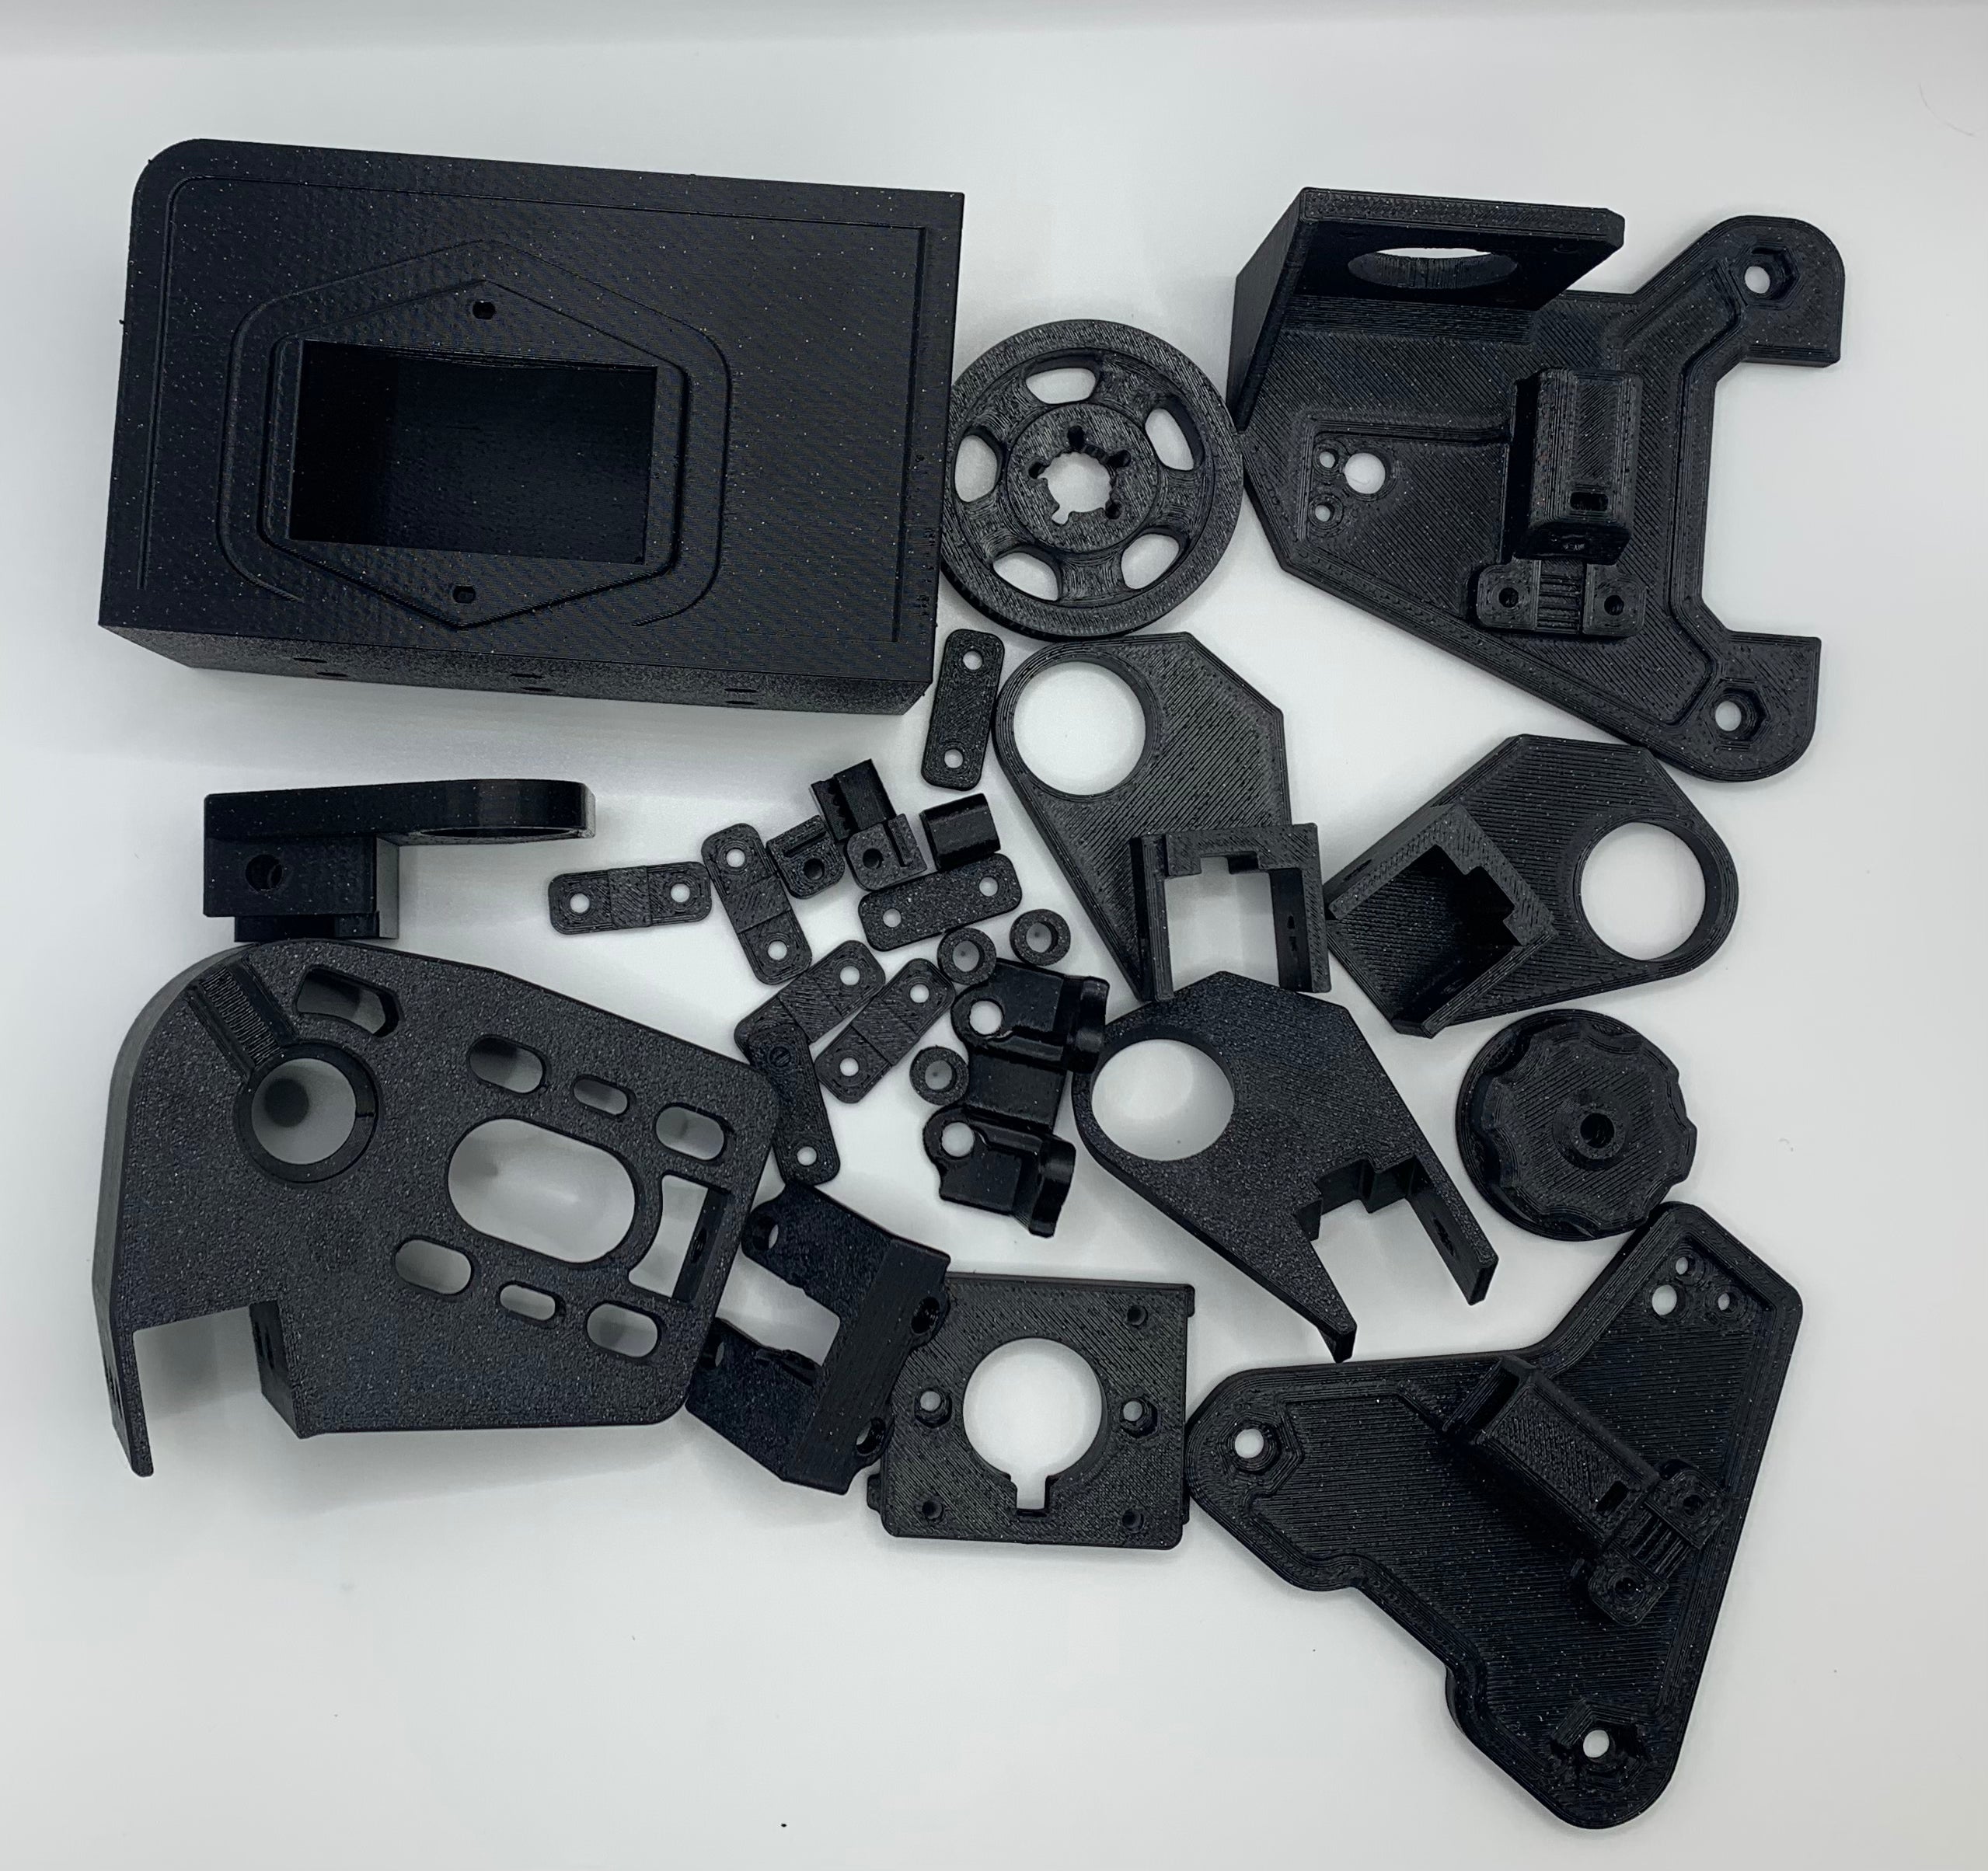 Belt Driven Ender 3 Z Hardware and Printed Parts Kit by kevinakasam